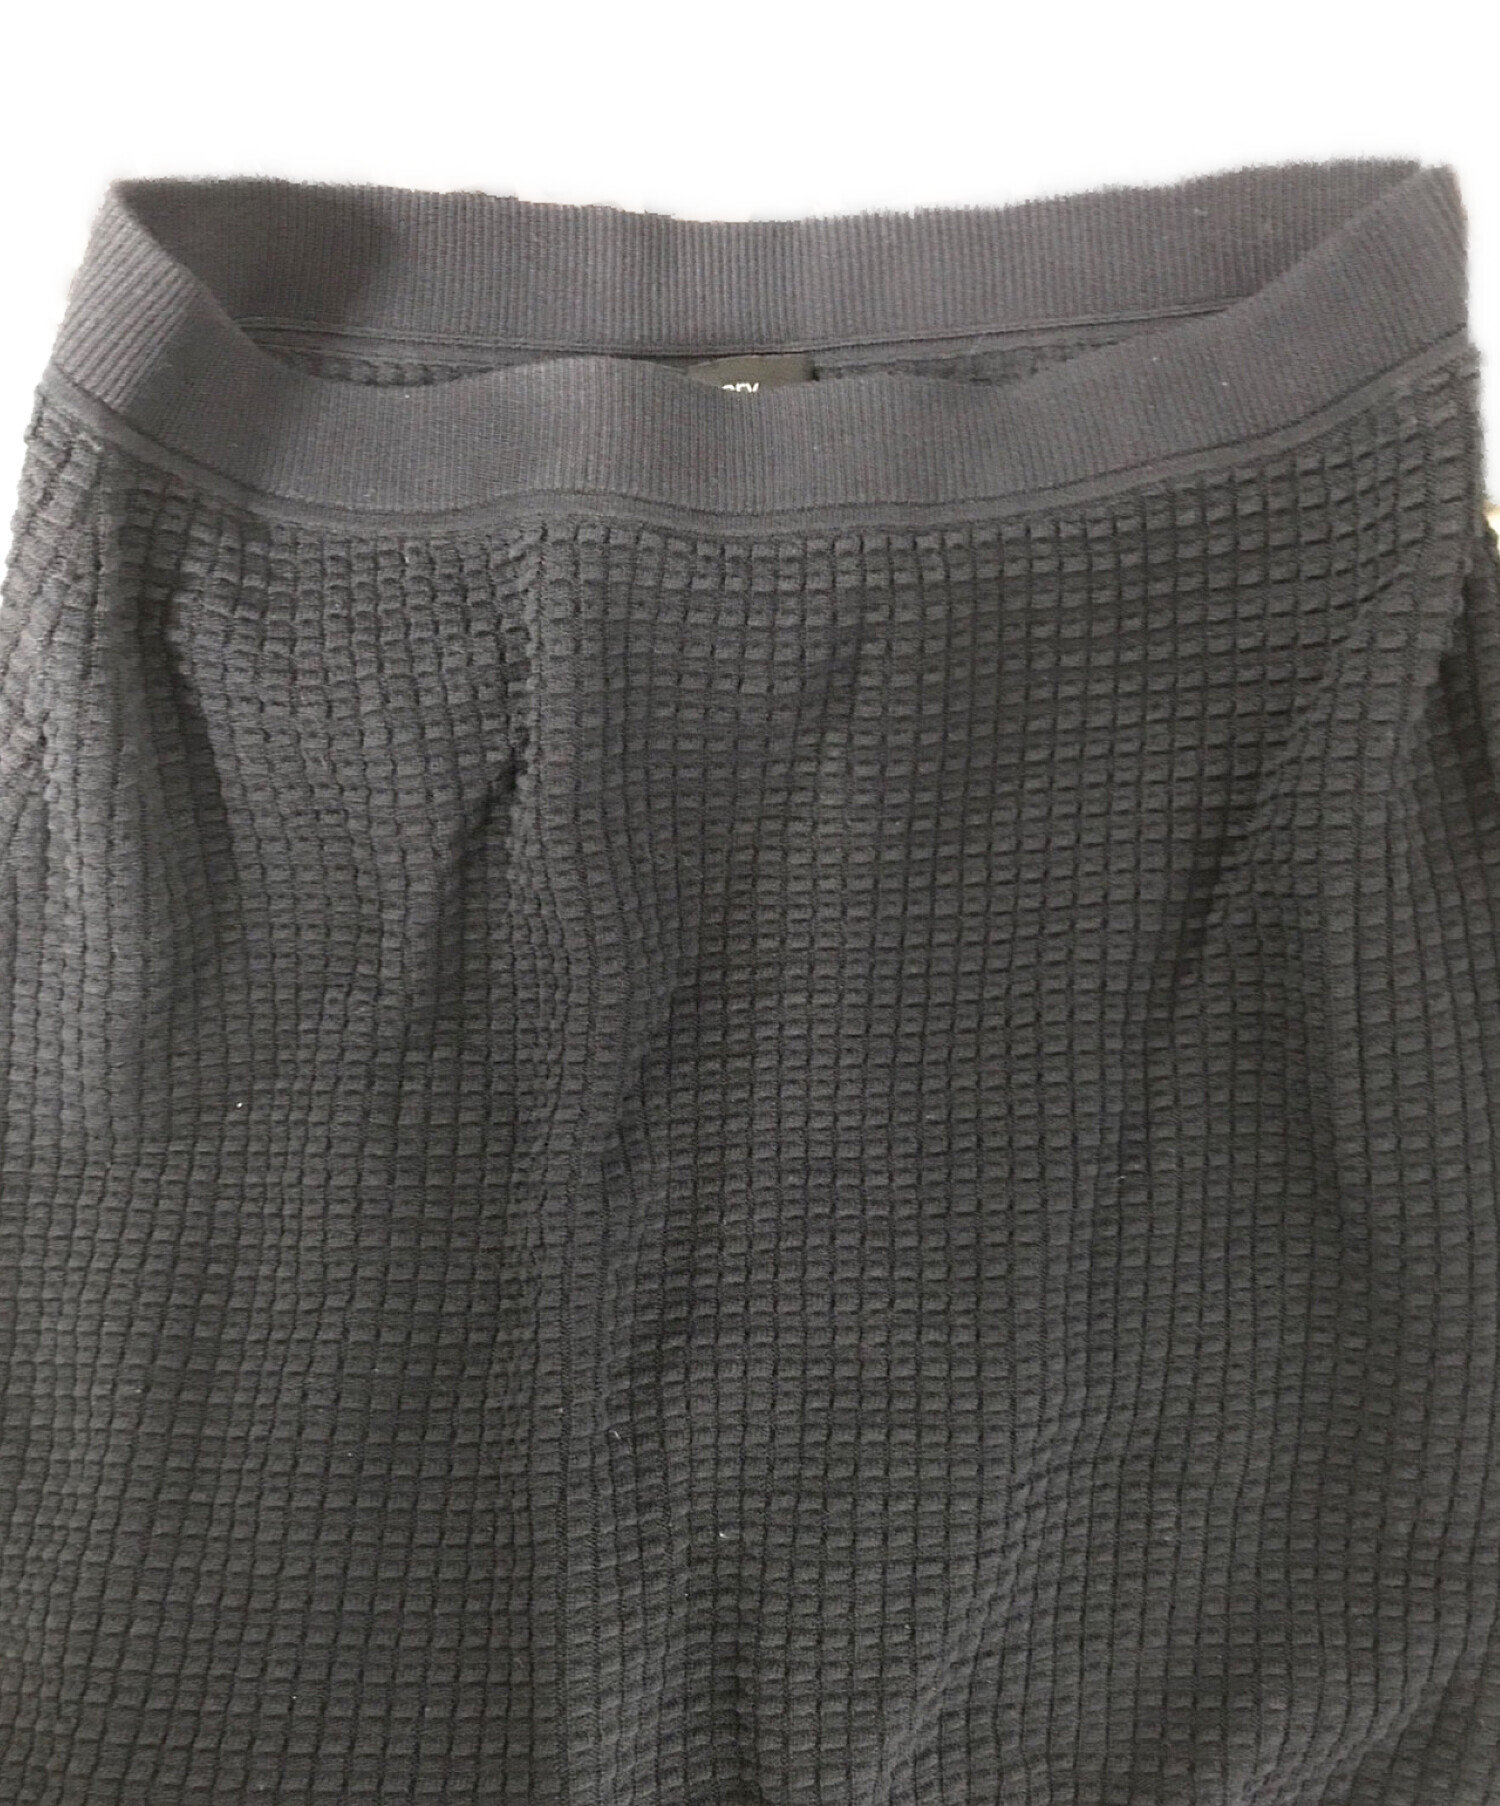 theory (セオリー) Bristol Cotton Lace Trim Skirt ネイビー サイズ:M